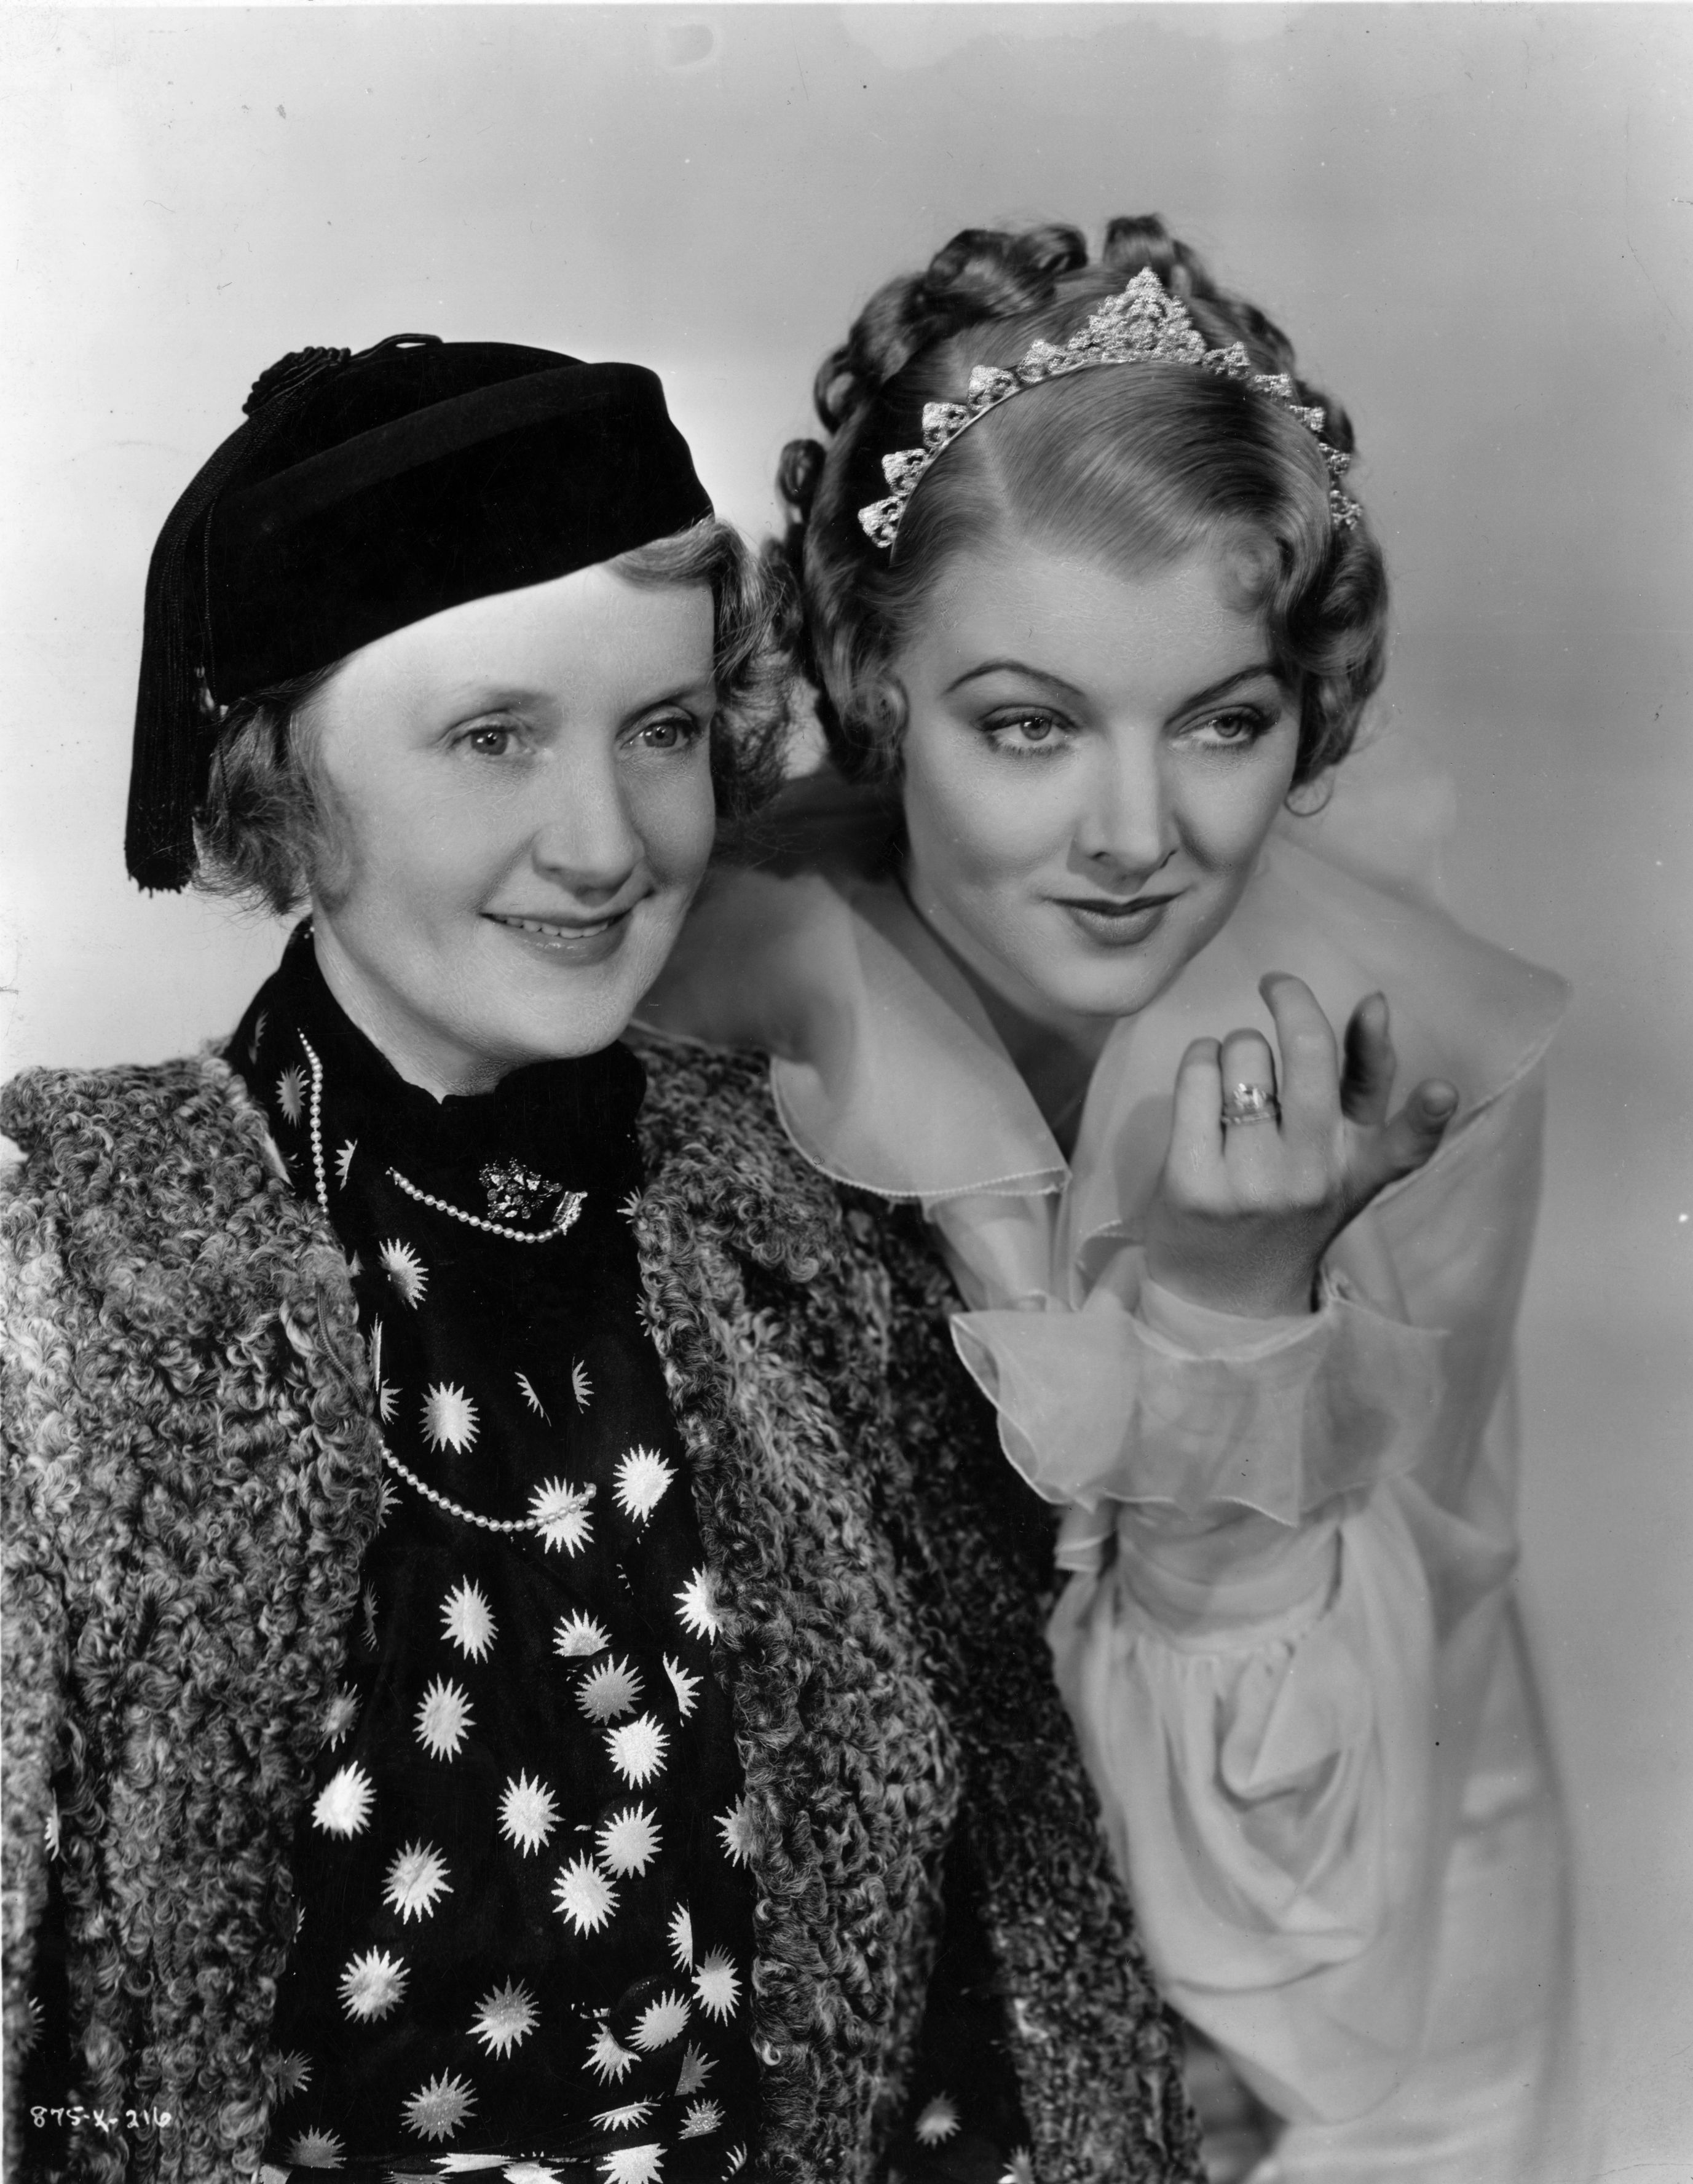 Still of Myrna Loy in The Great Ziegfeld (1936)